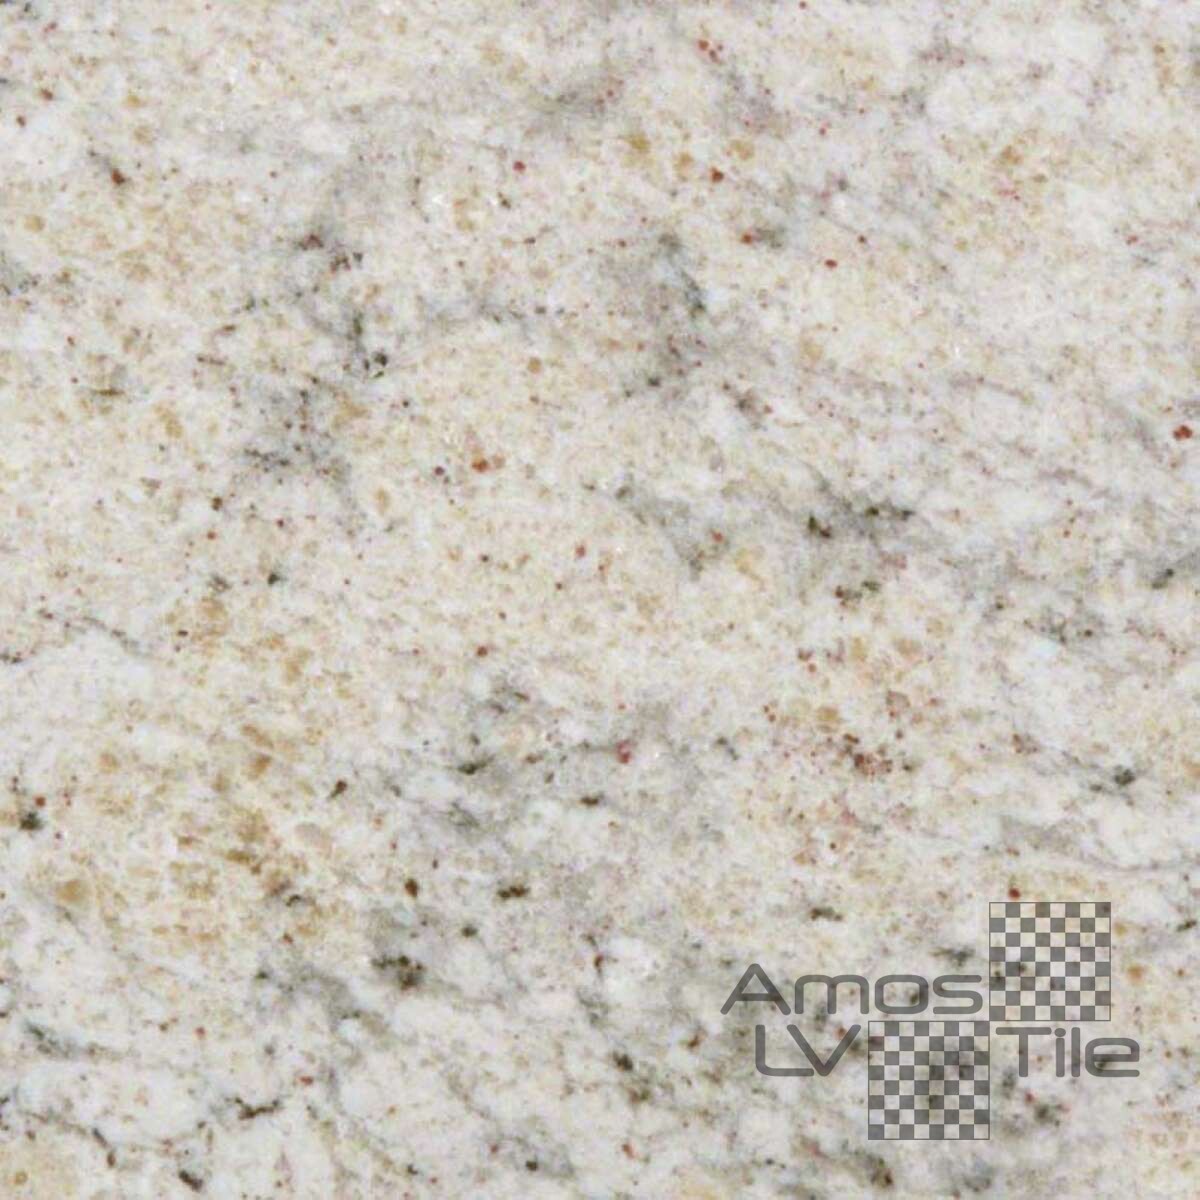 bianco-romano-granite_1